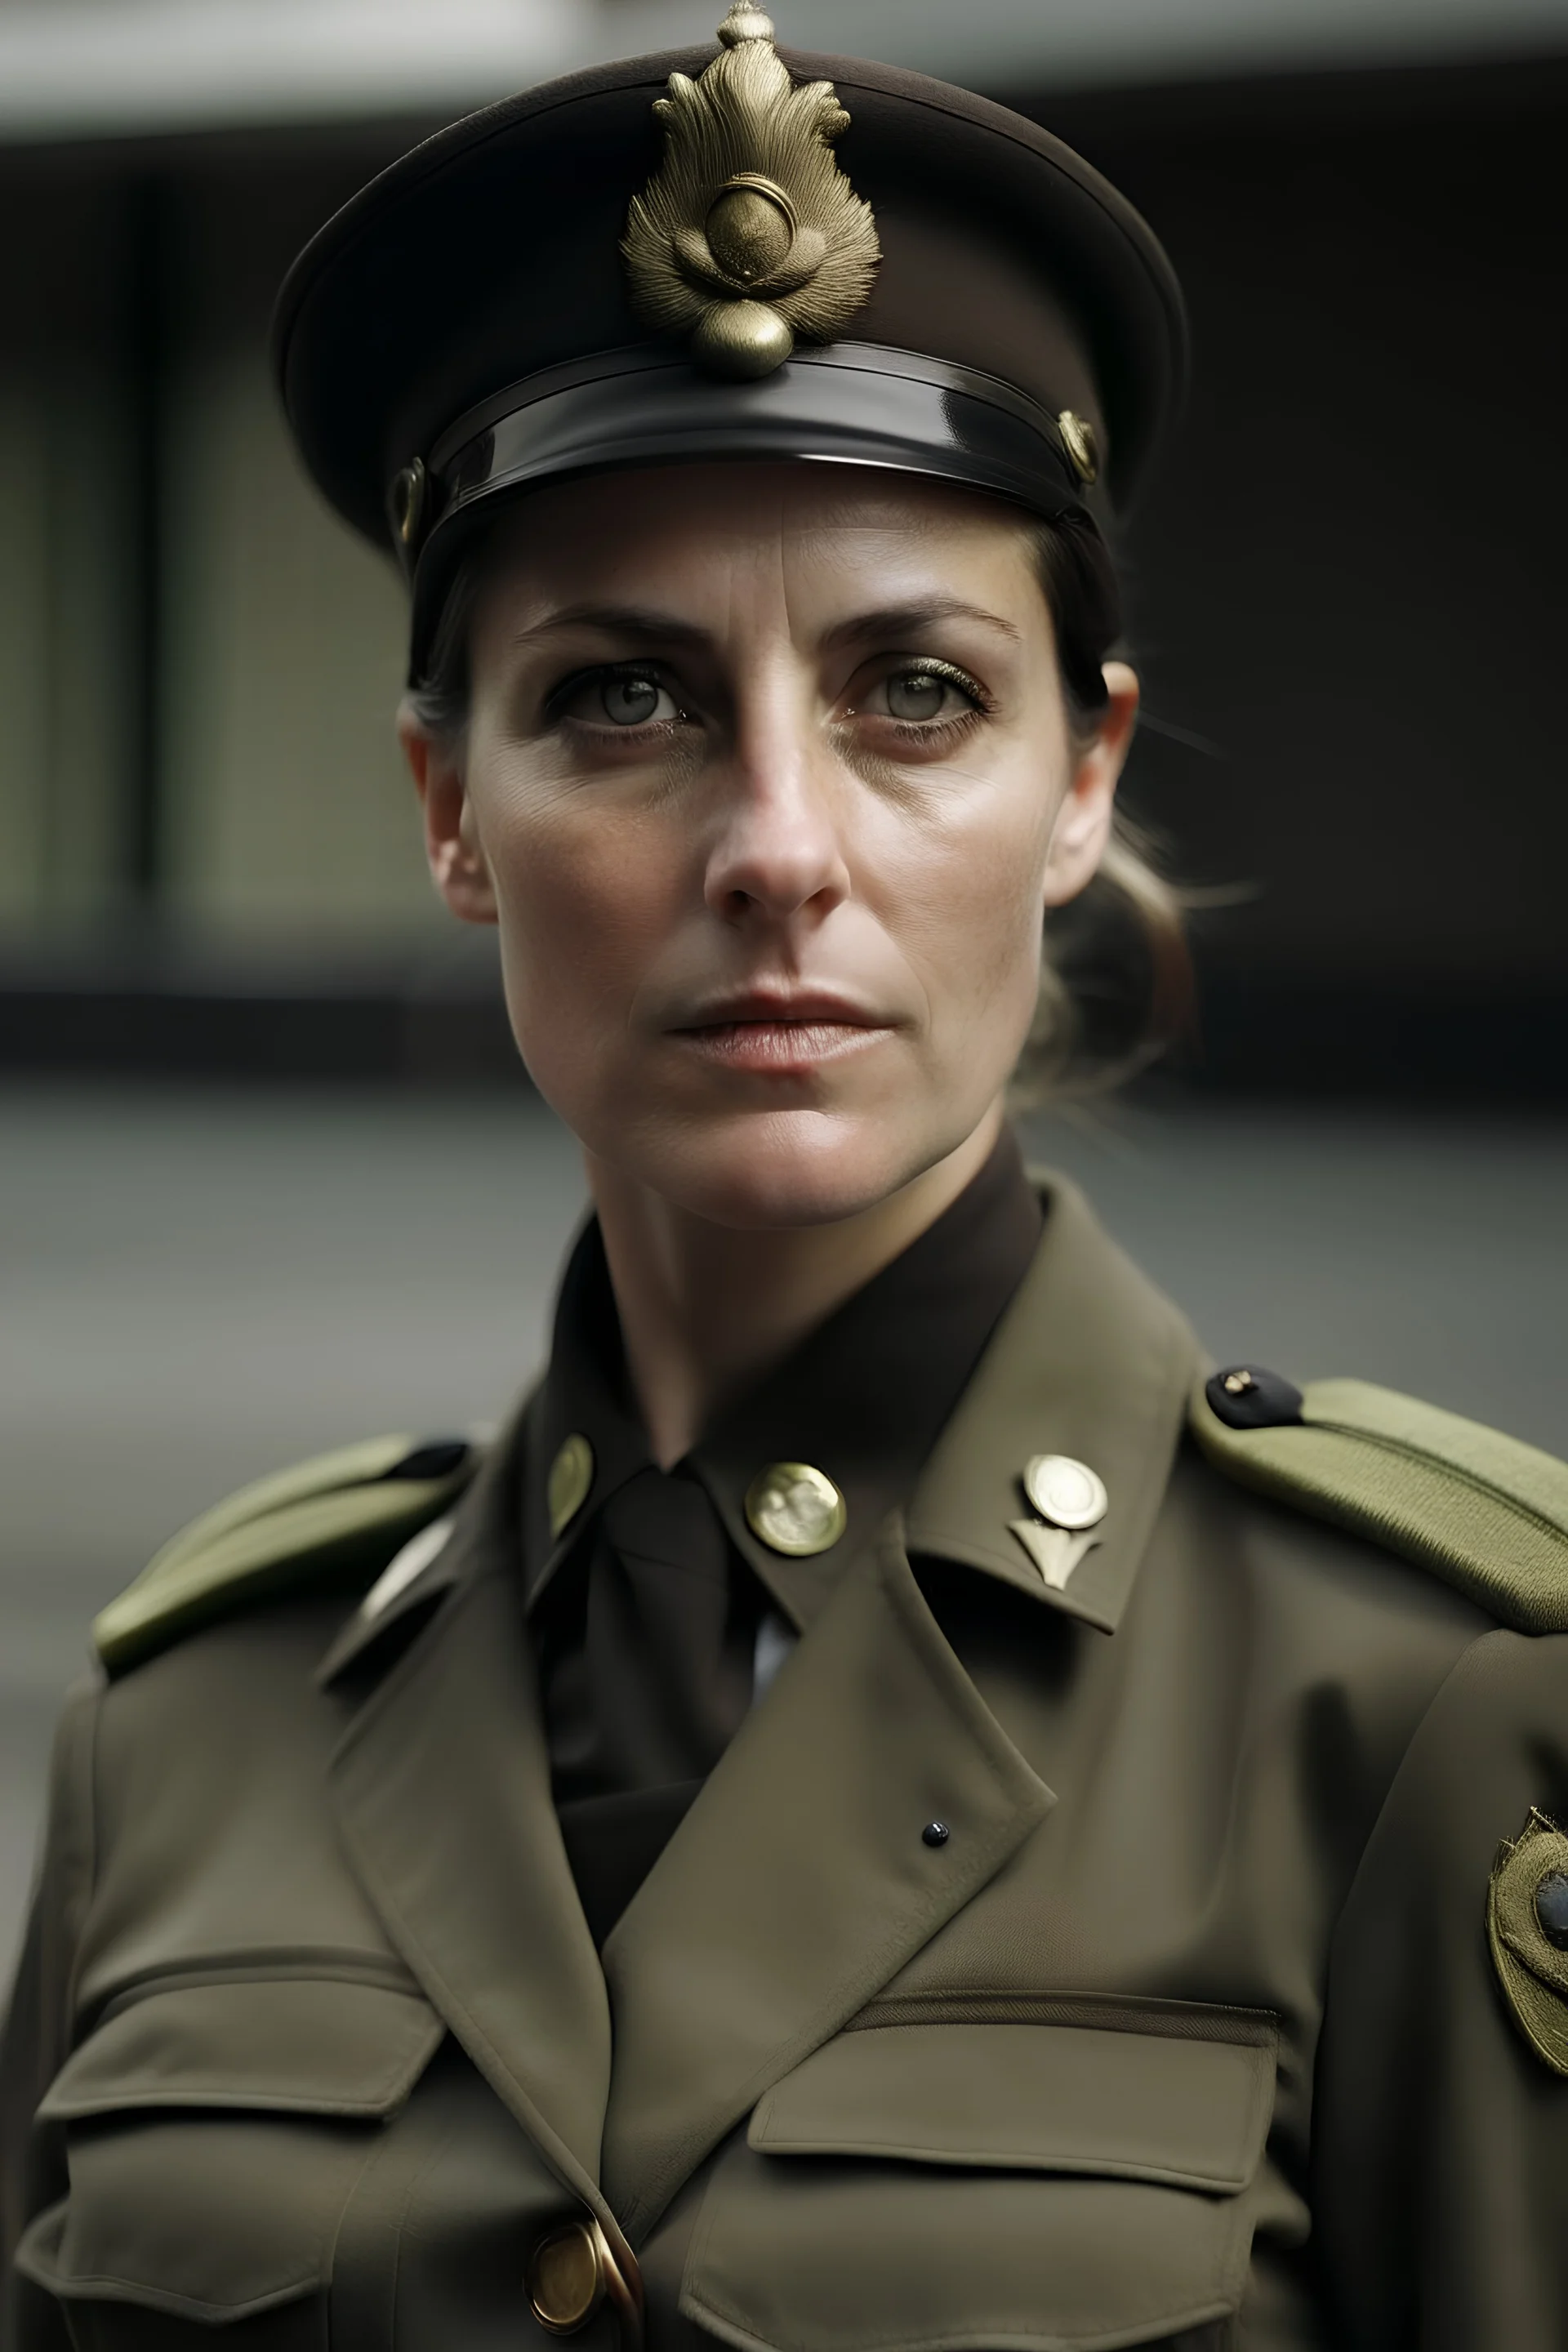 A woman wearing war uniform